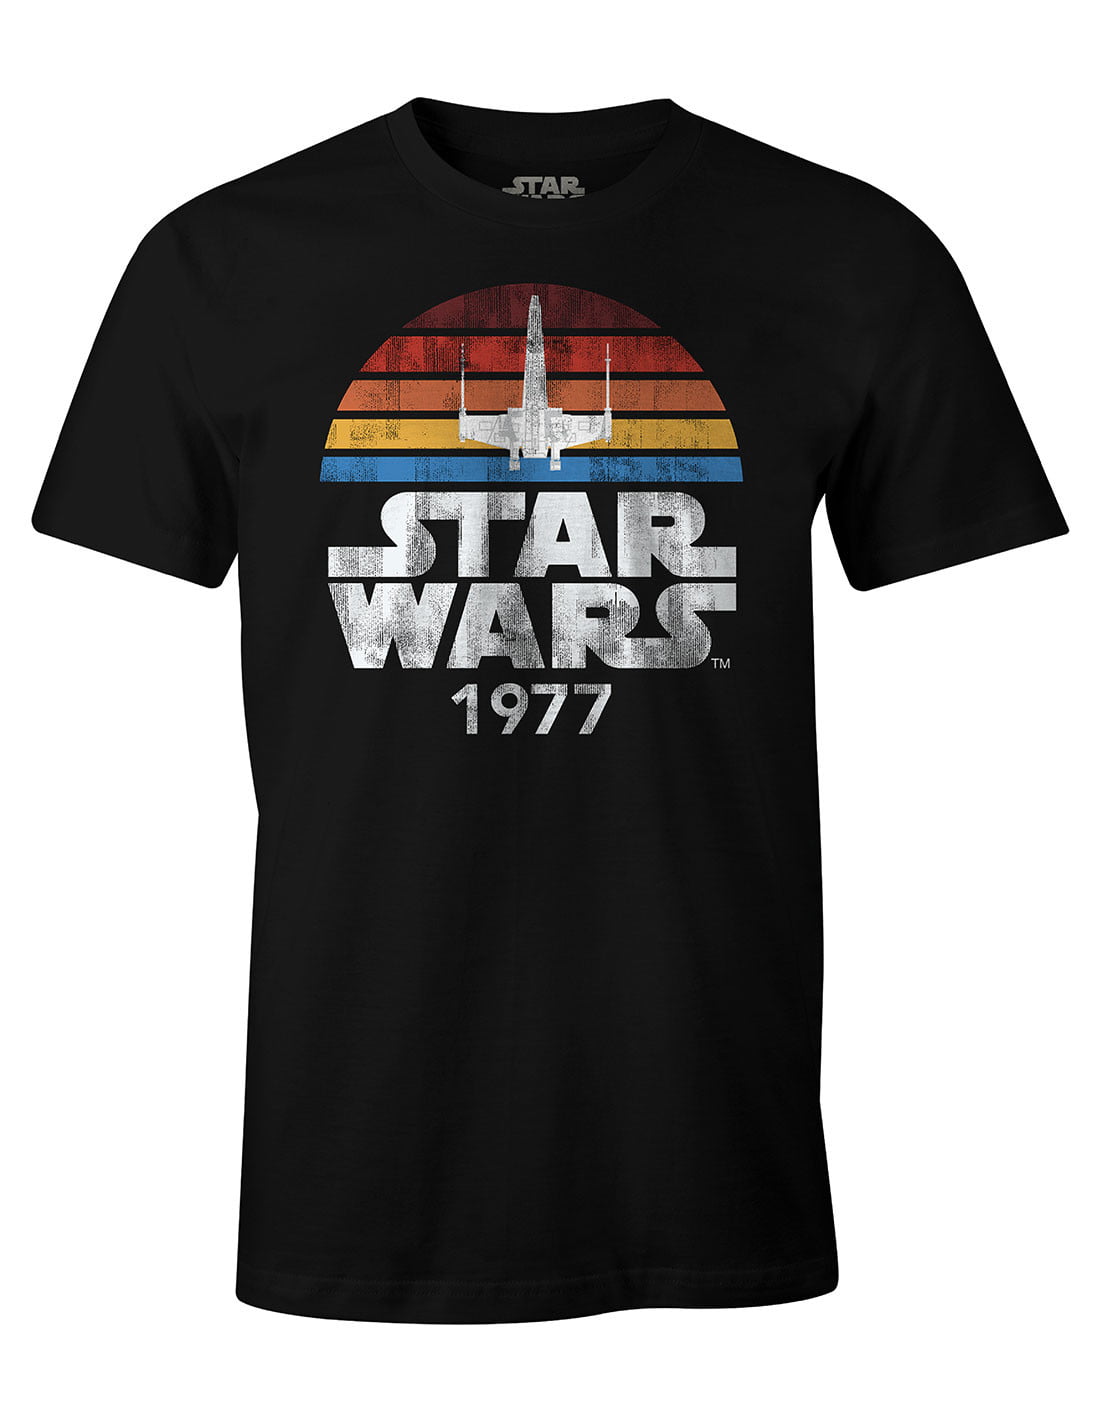 Sort Star Wars 1977 t-shirt